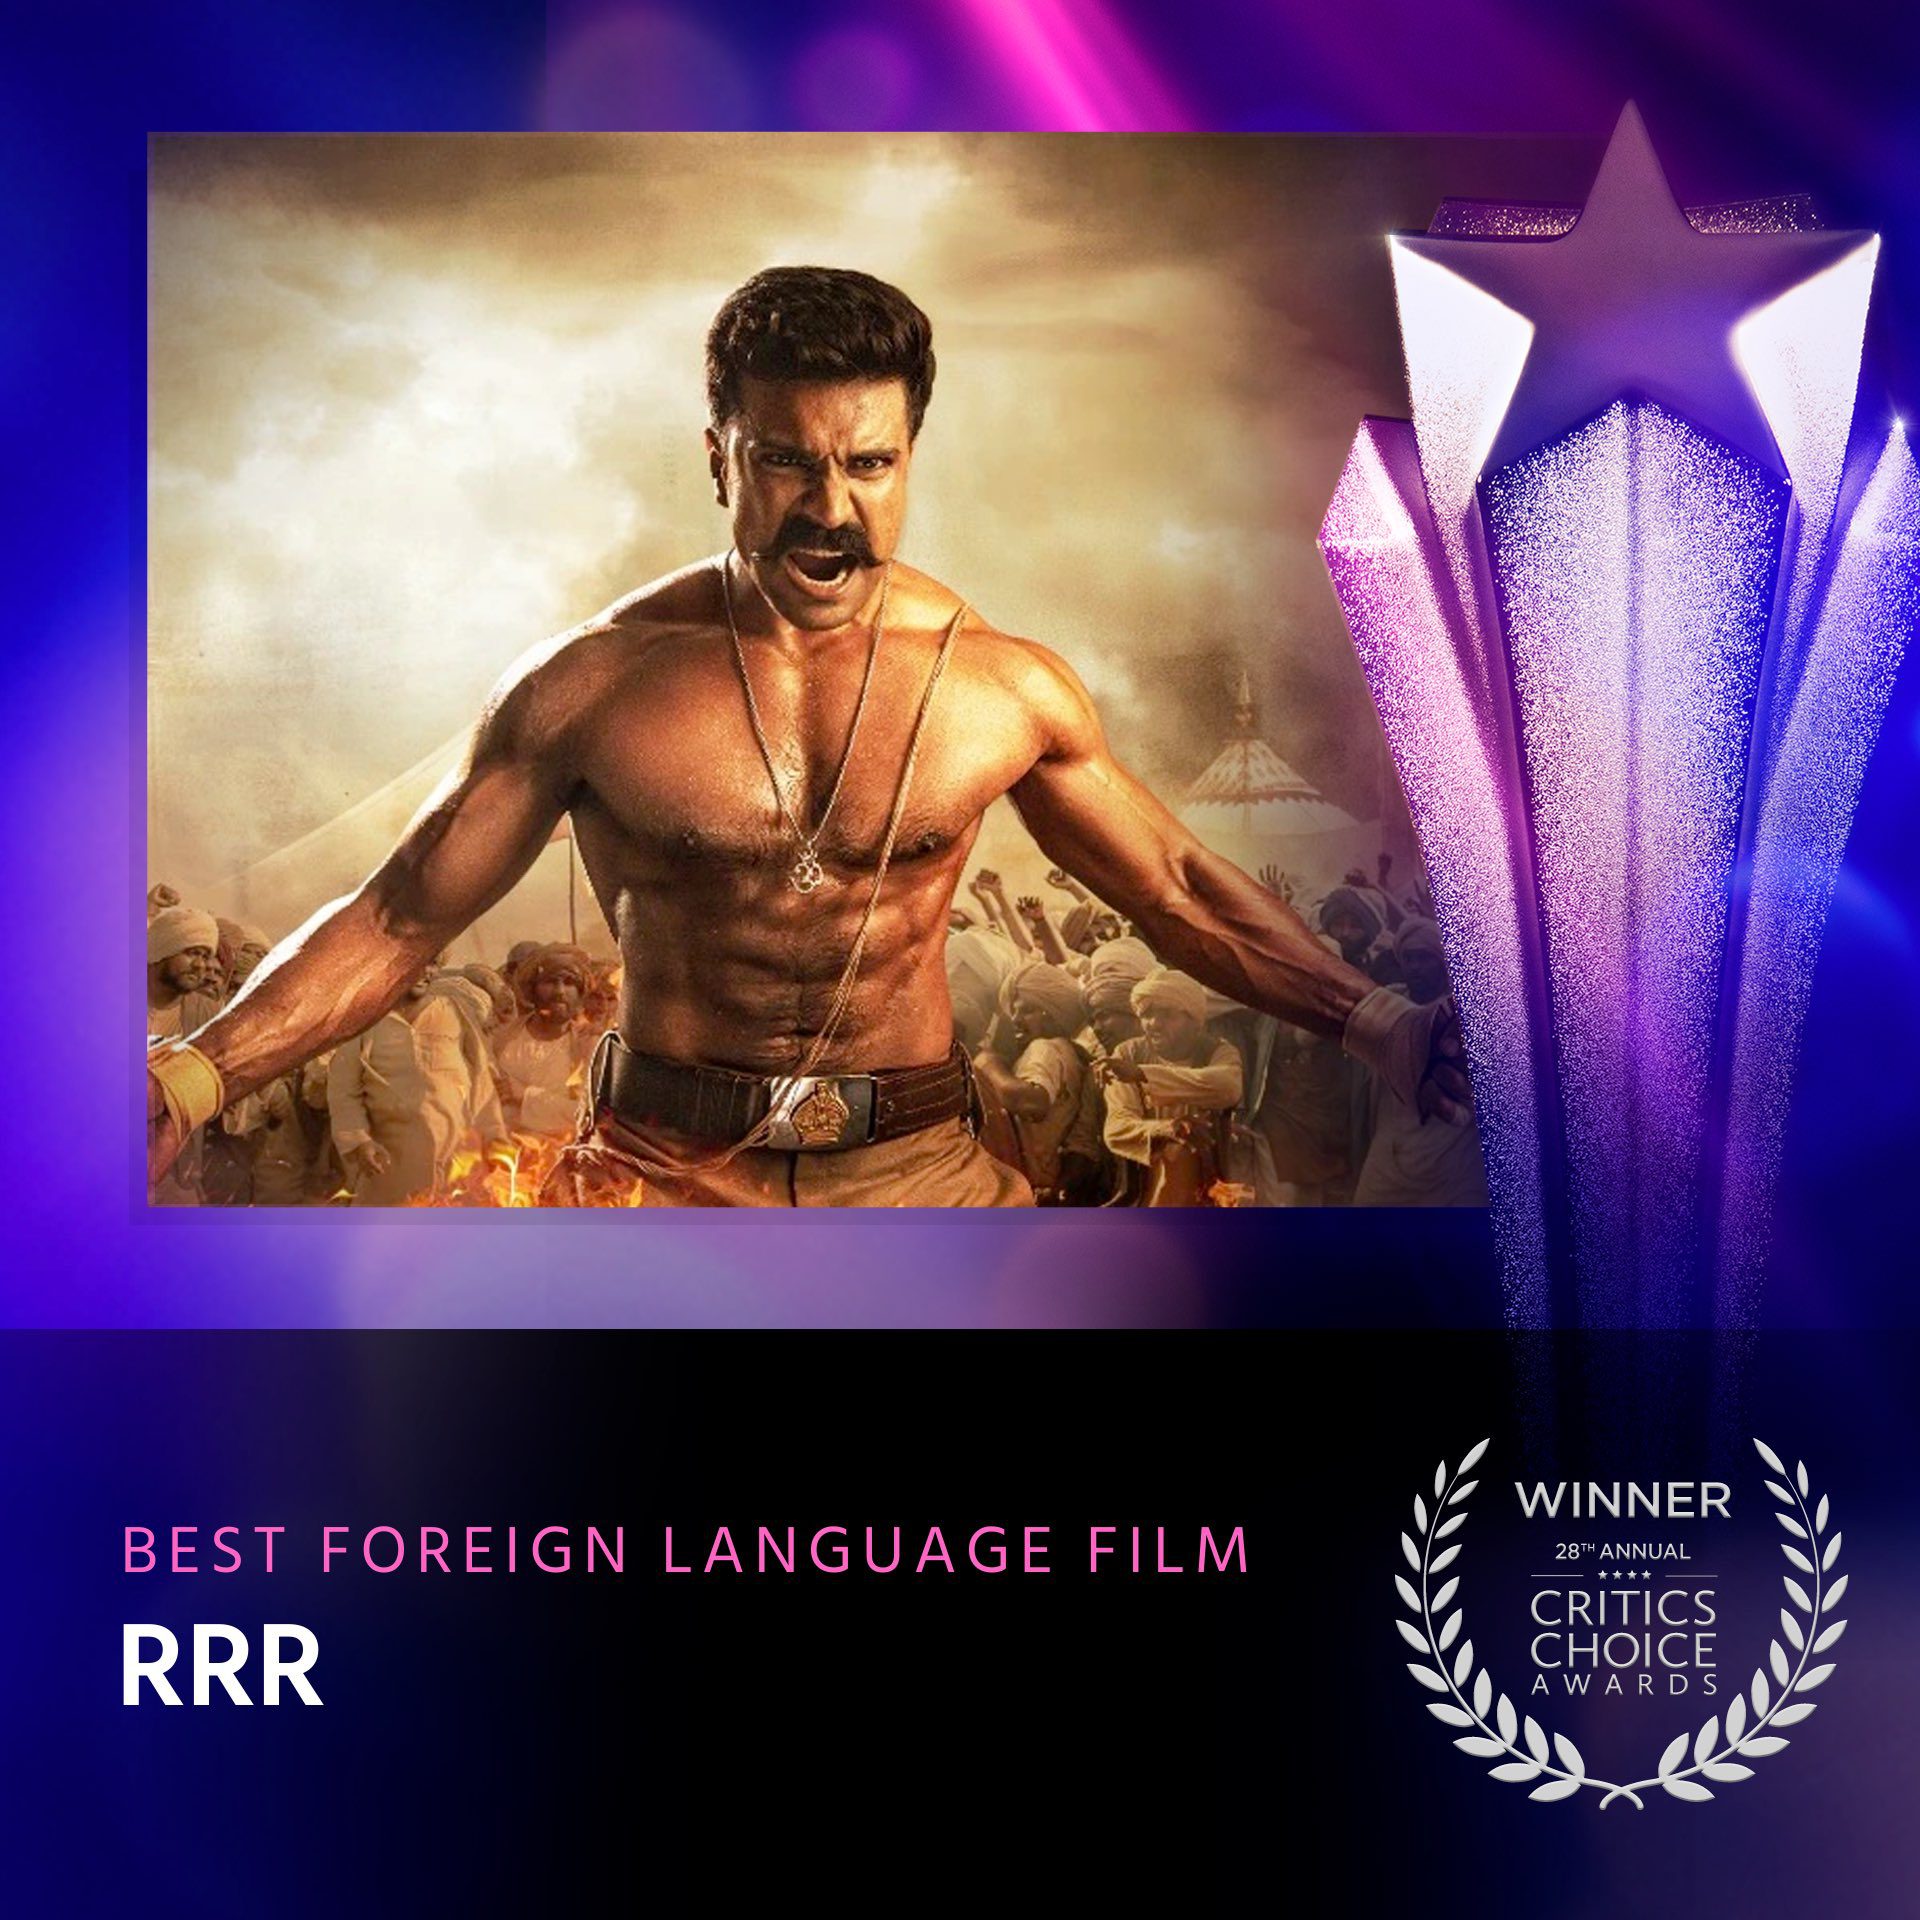 RRR won Critics Choice Award for the Best Foreign Language Film